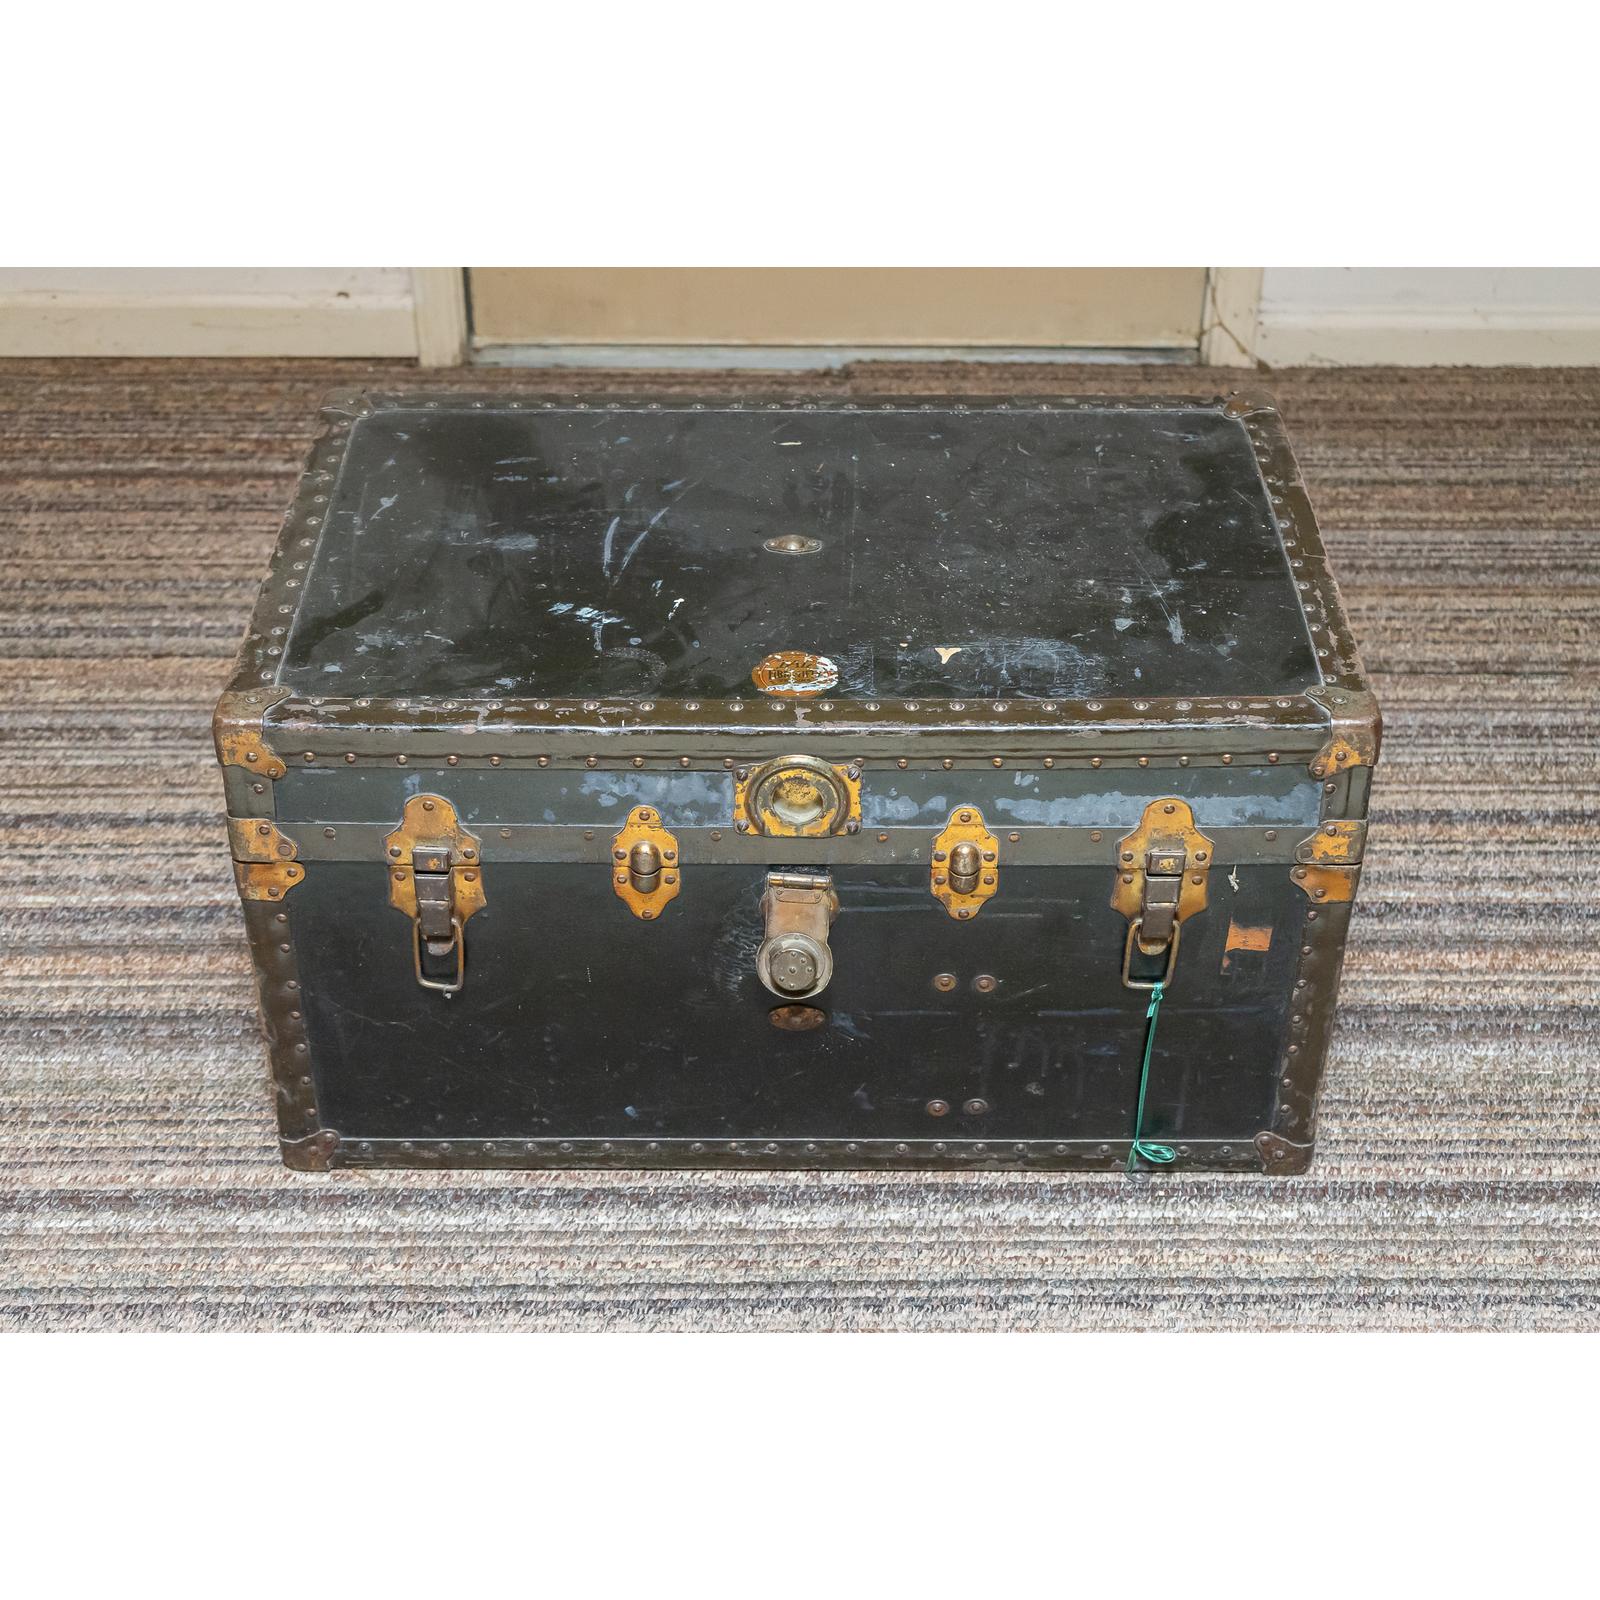 Sold at Auction: Vintage Steamer Trunk w/ Brass Hardware